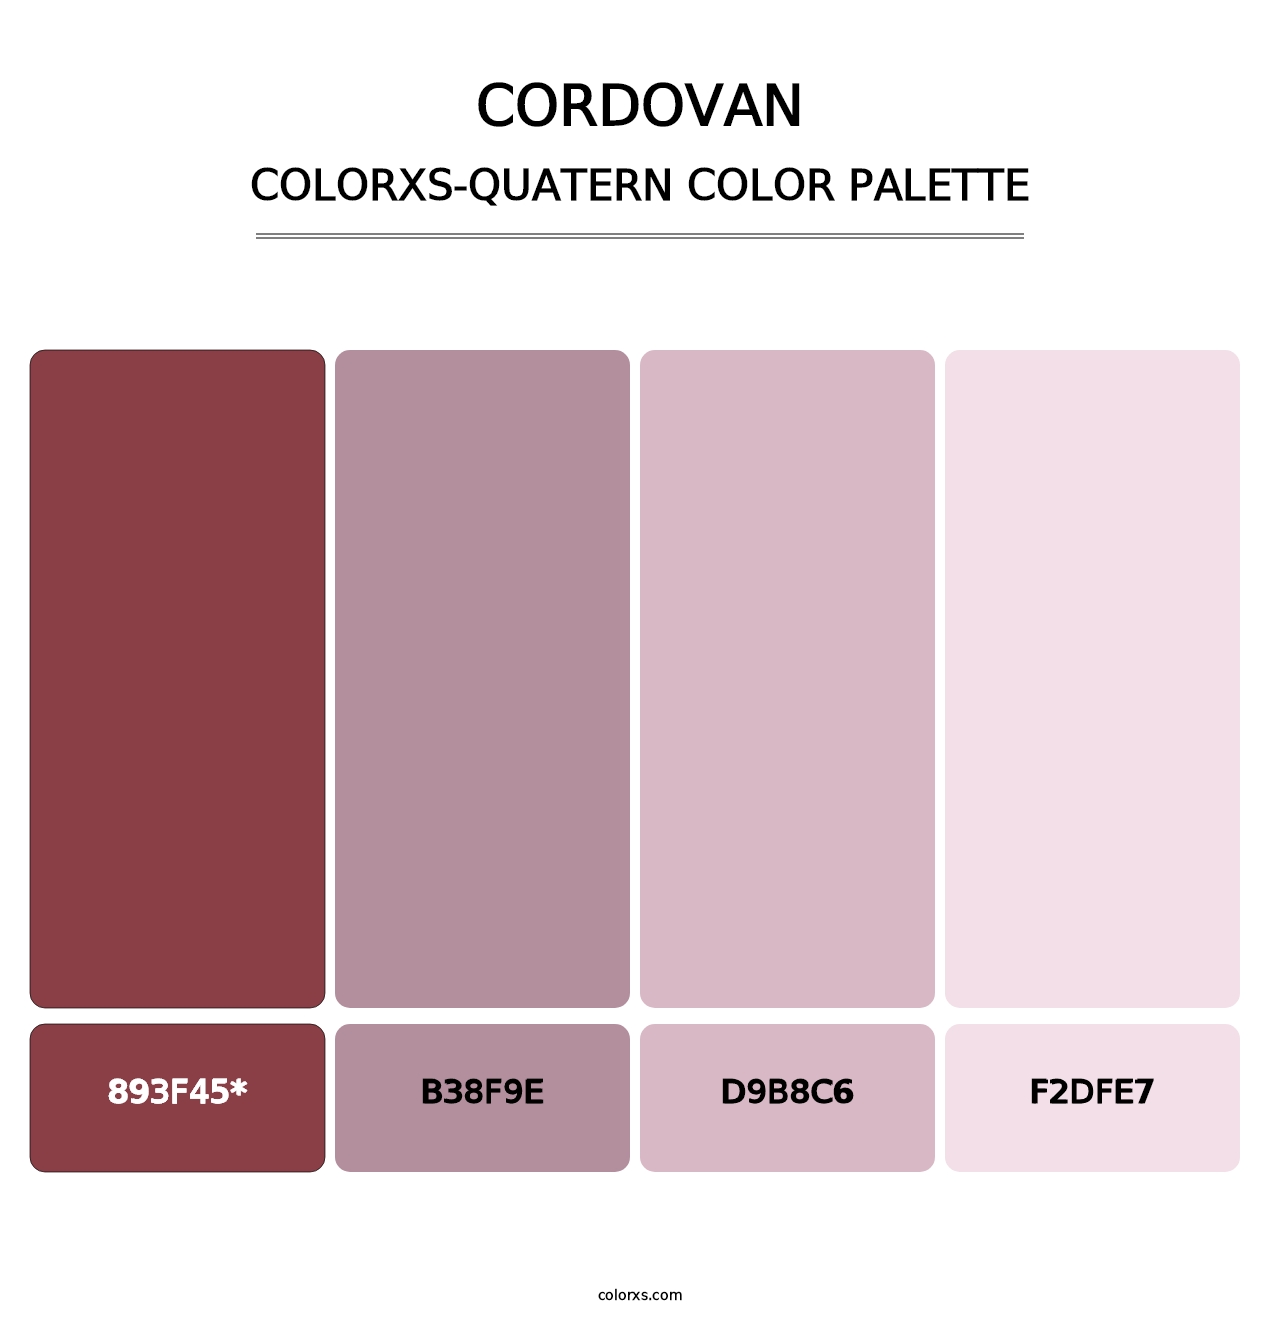 Cordovan - Colorxs Quatern Palette